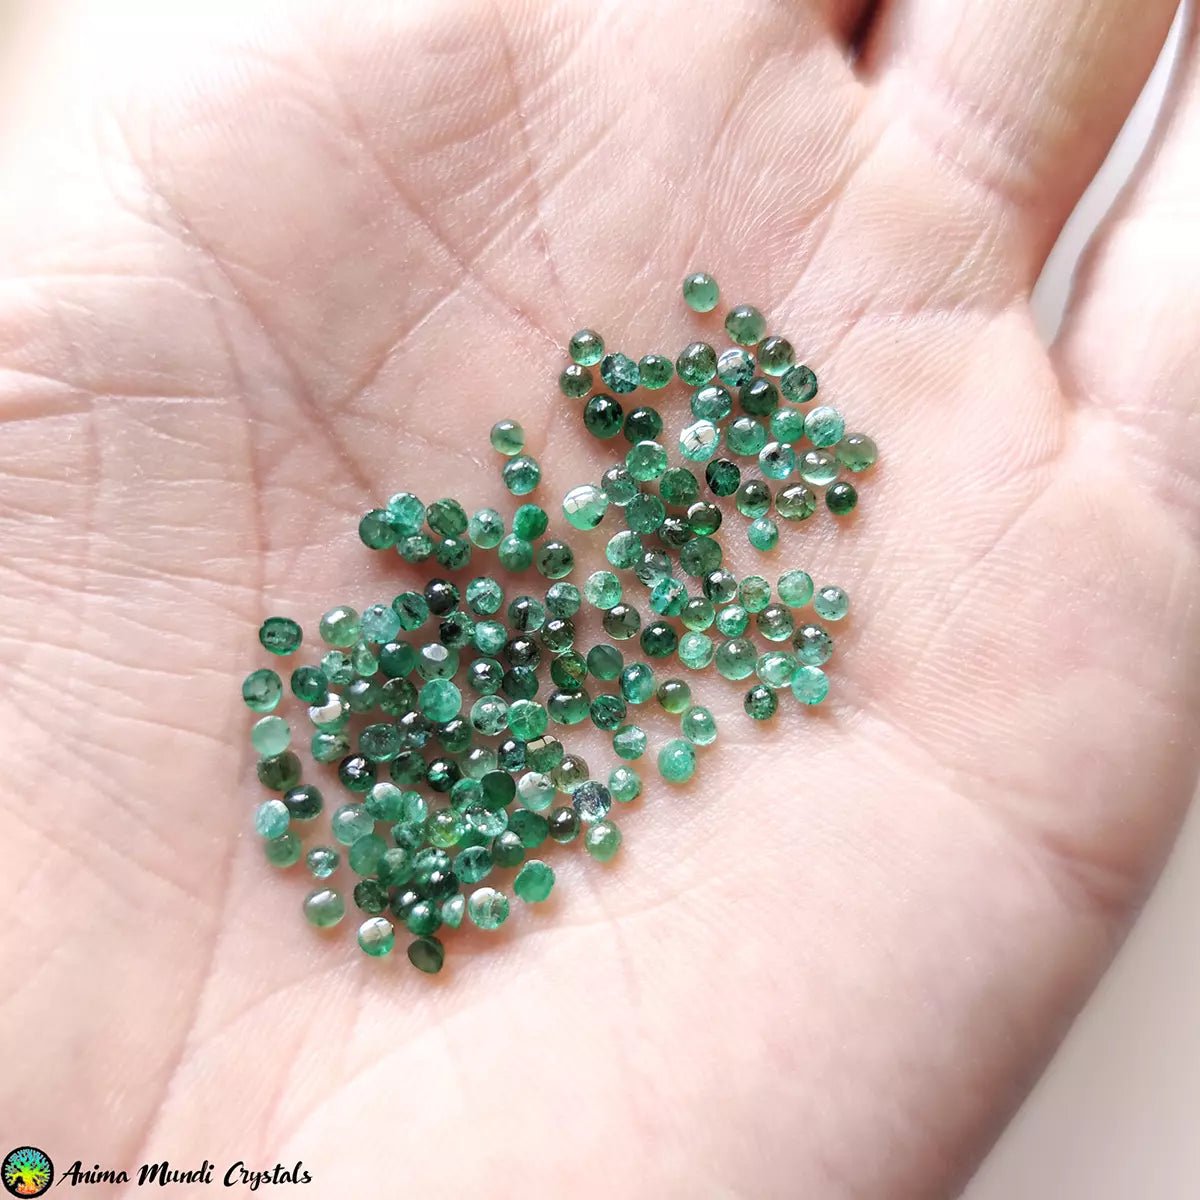 2mm Emerald Mini Cabochons - 5pcs - Anima Mundi Crystals